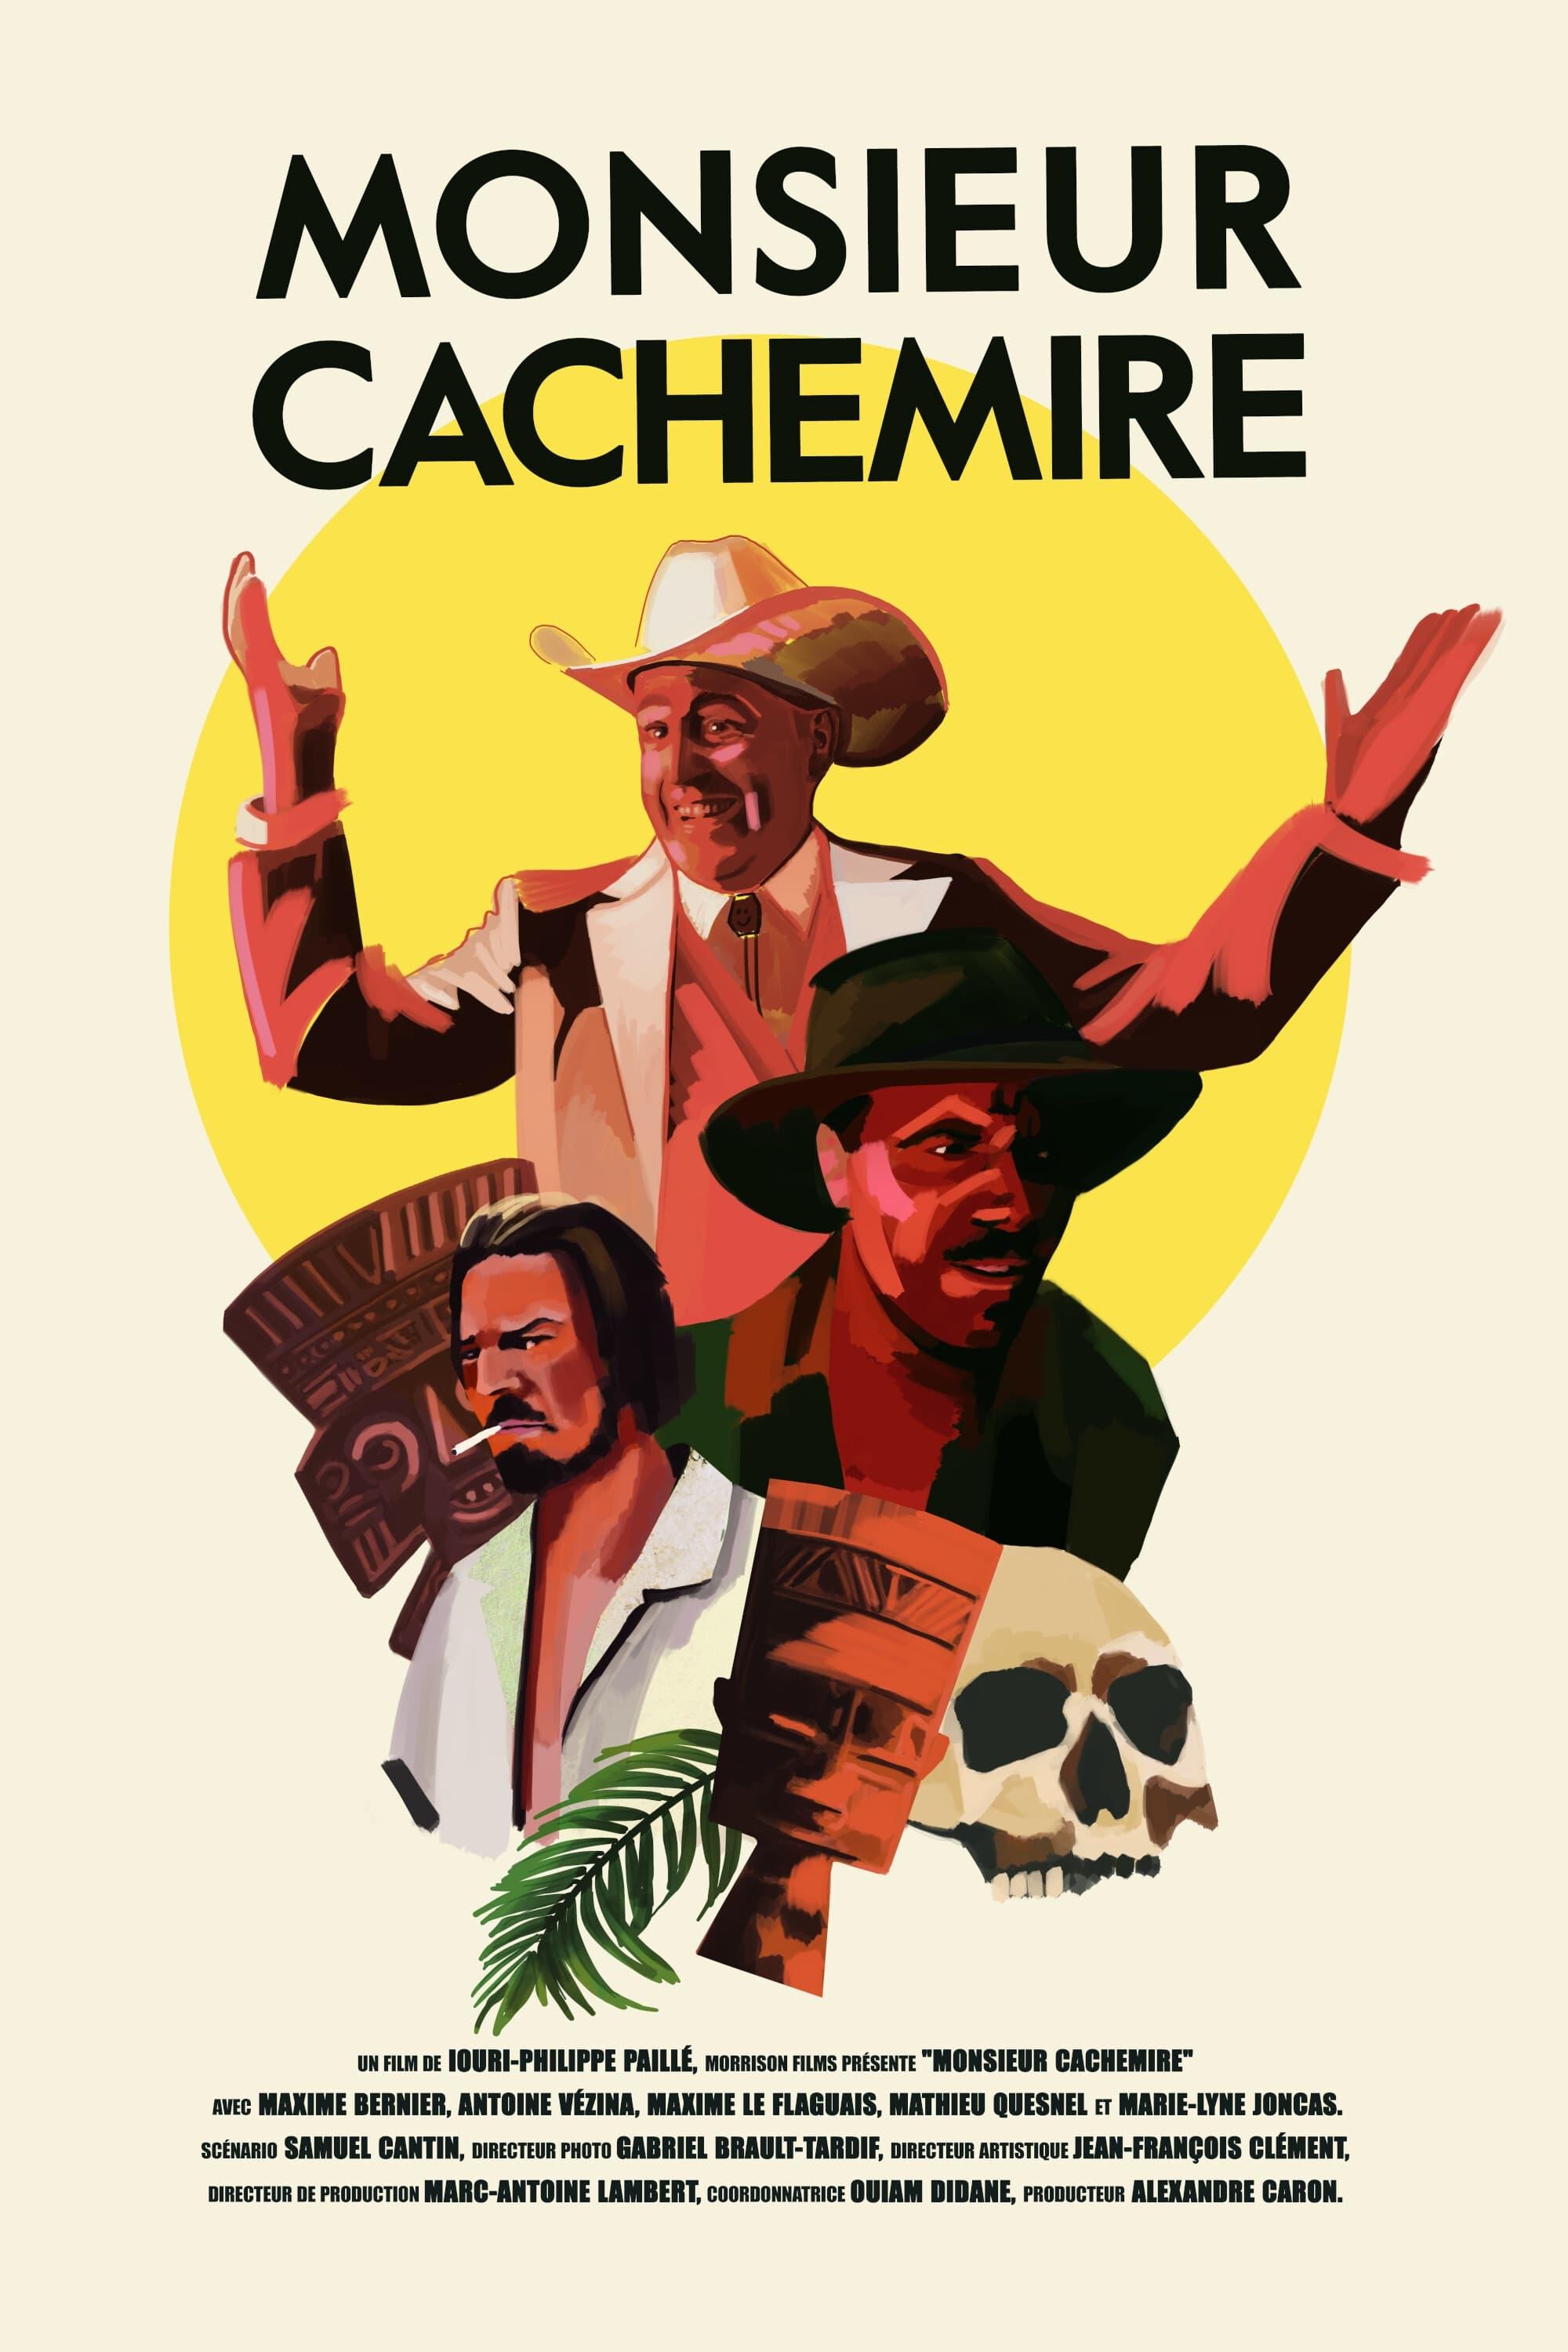 Monsieur Cachemire poster